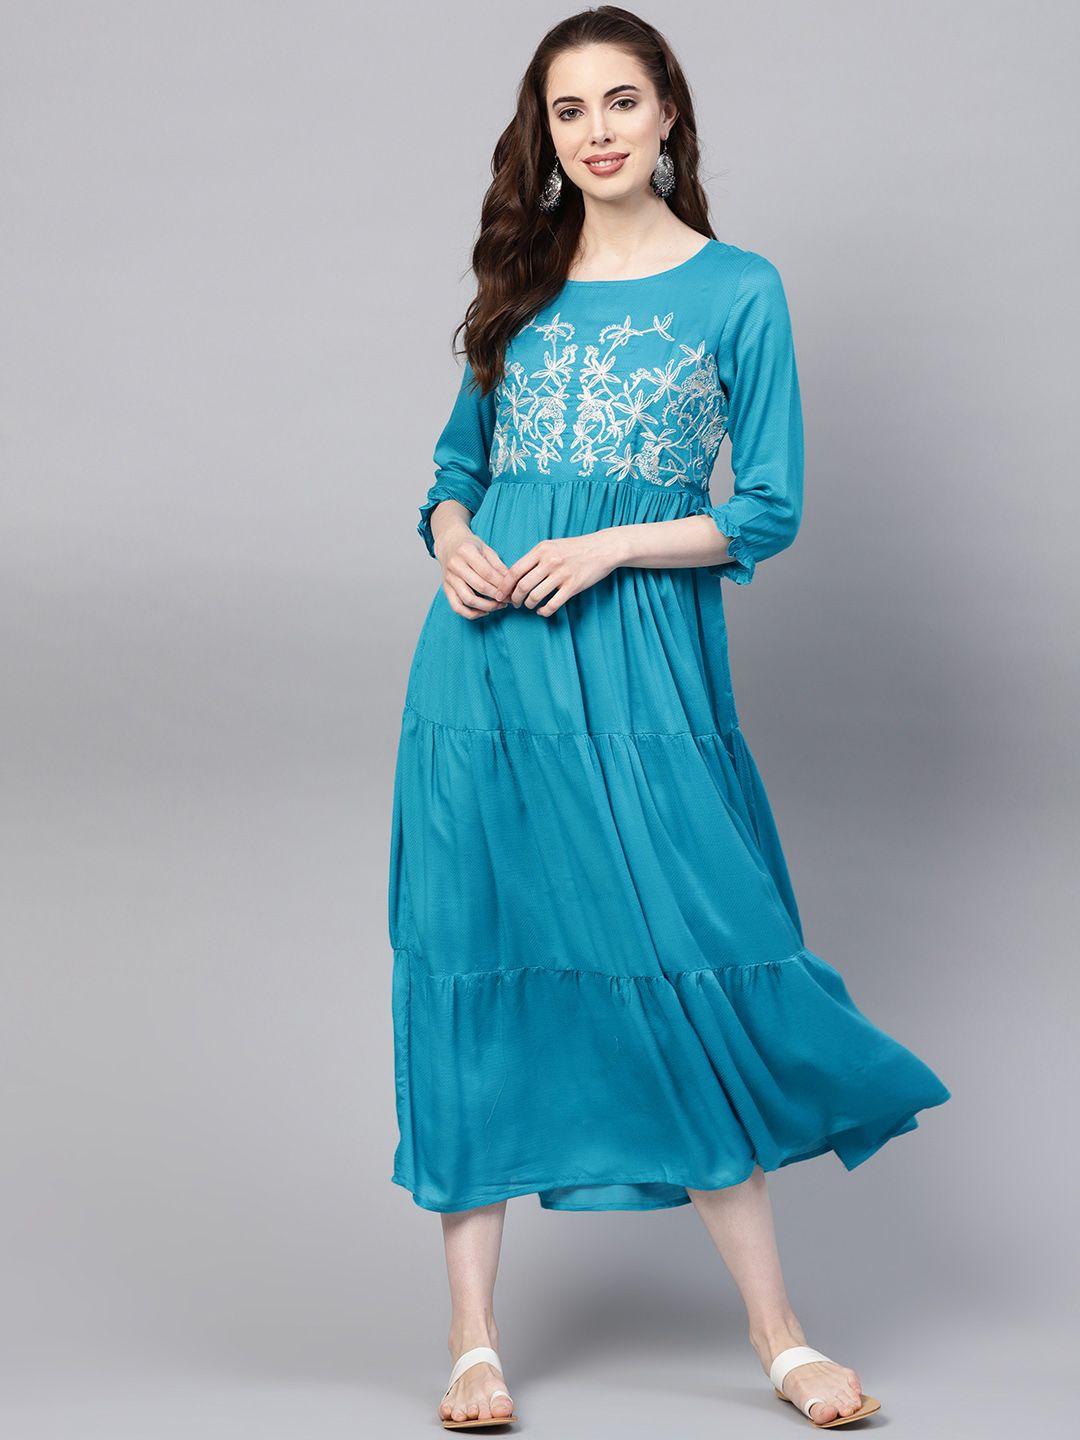 jaipur kurti turquoise blue self design tiered empire dress